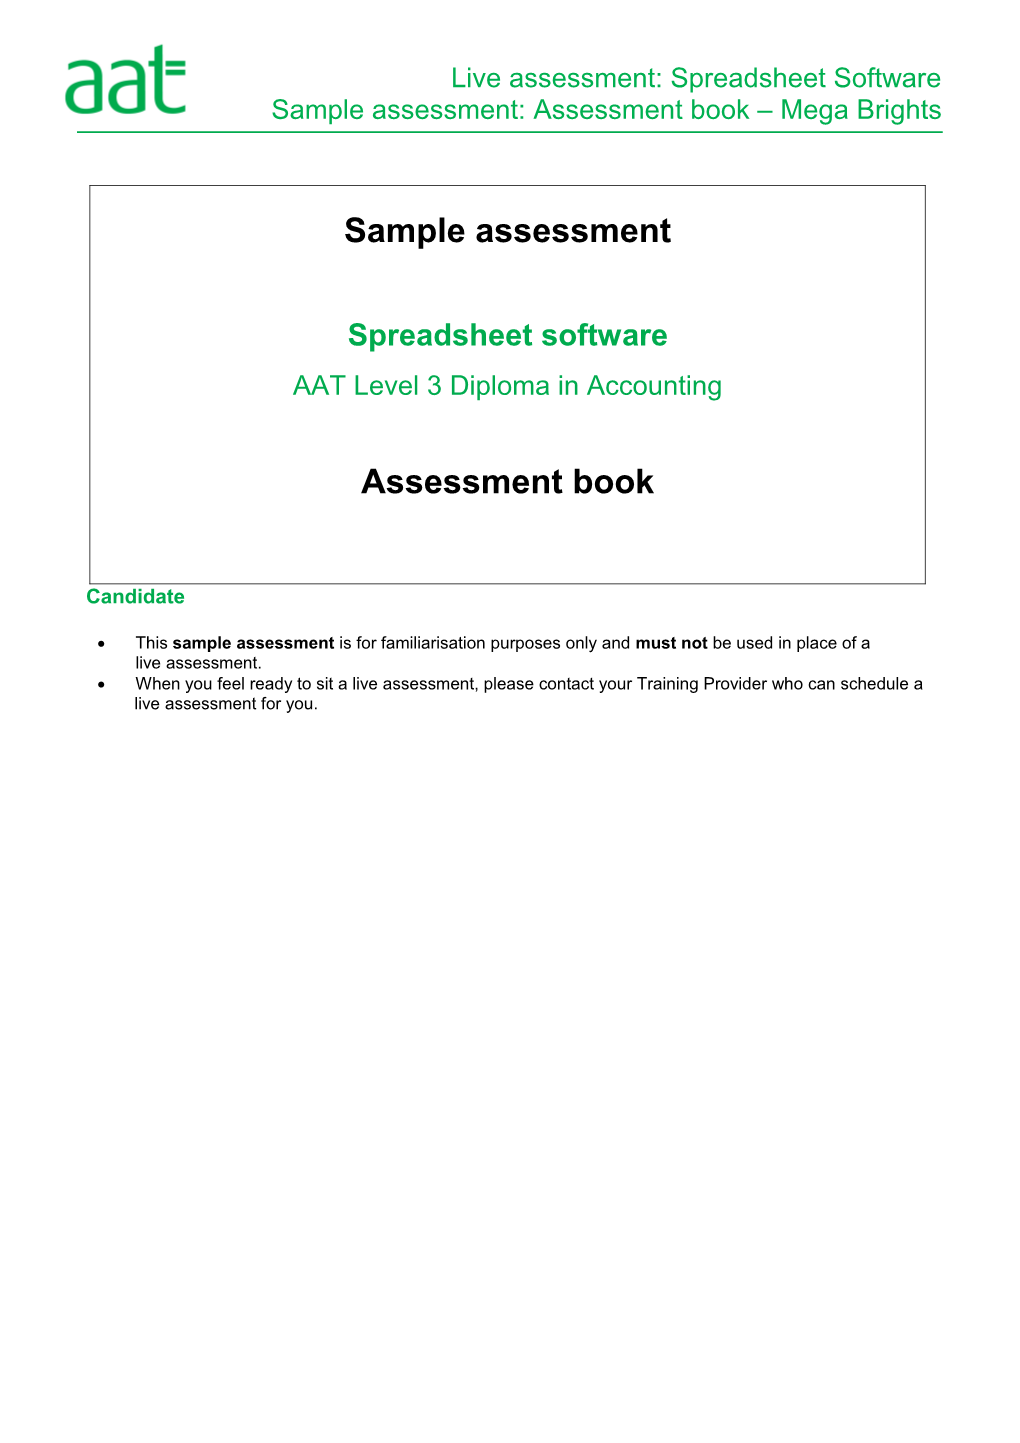 Live Assessment: Spreadsheet Software